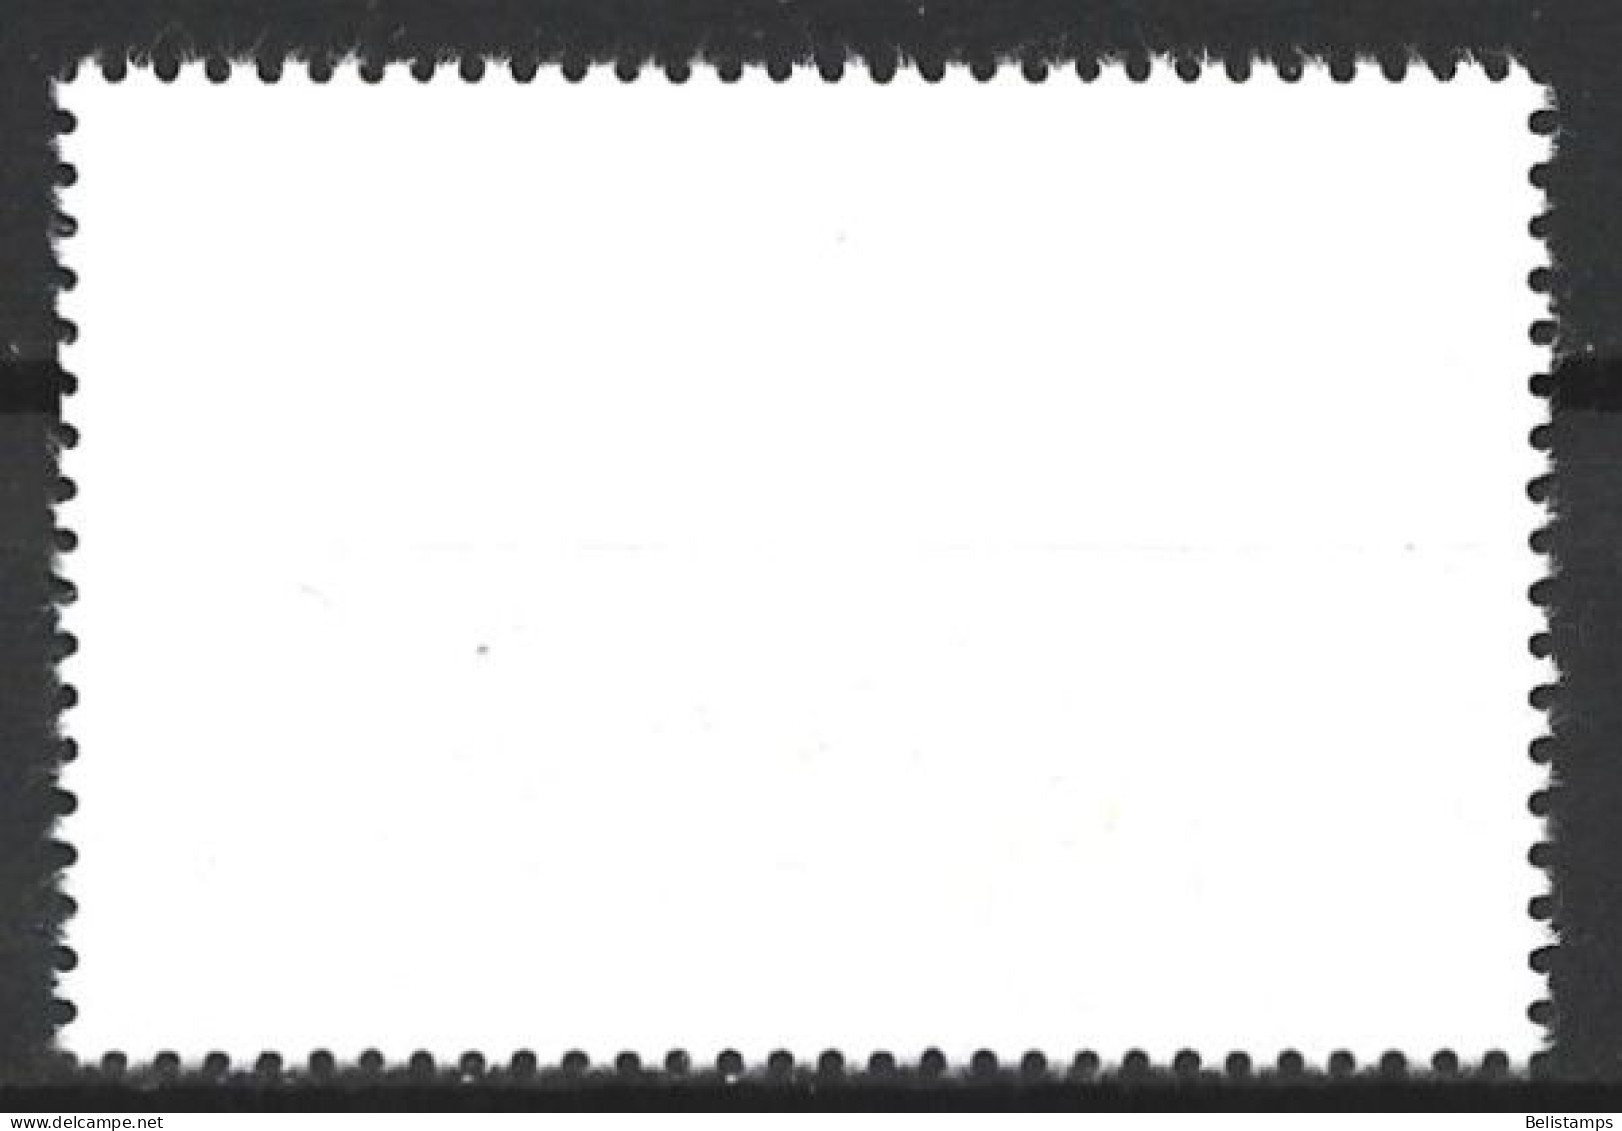 Cuba 1977. Scott #2163 (U) Intl. Airmail Service, 50th Anniv. - Usados